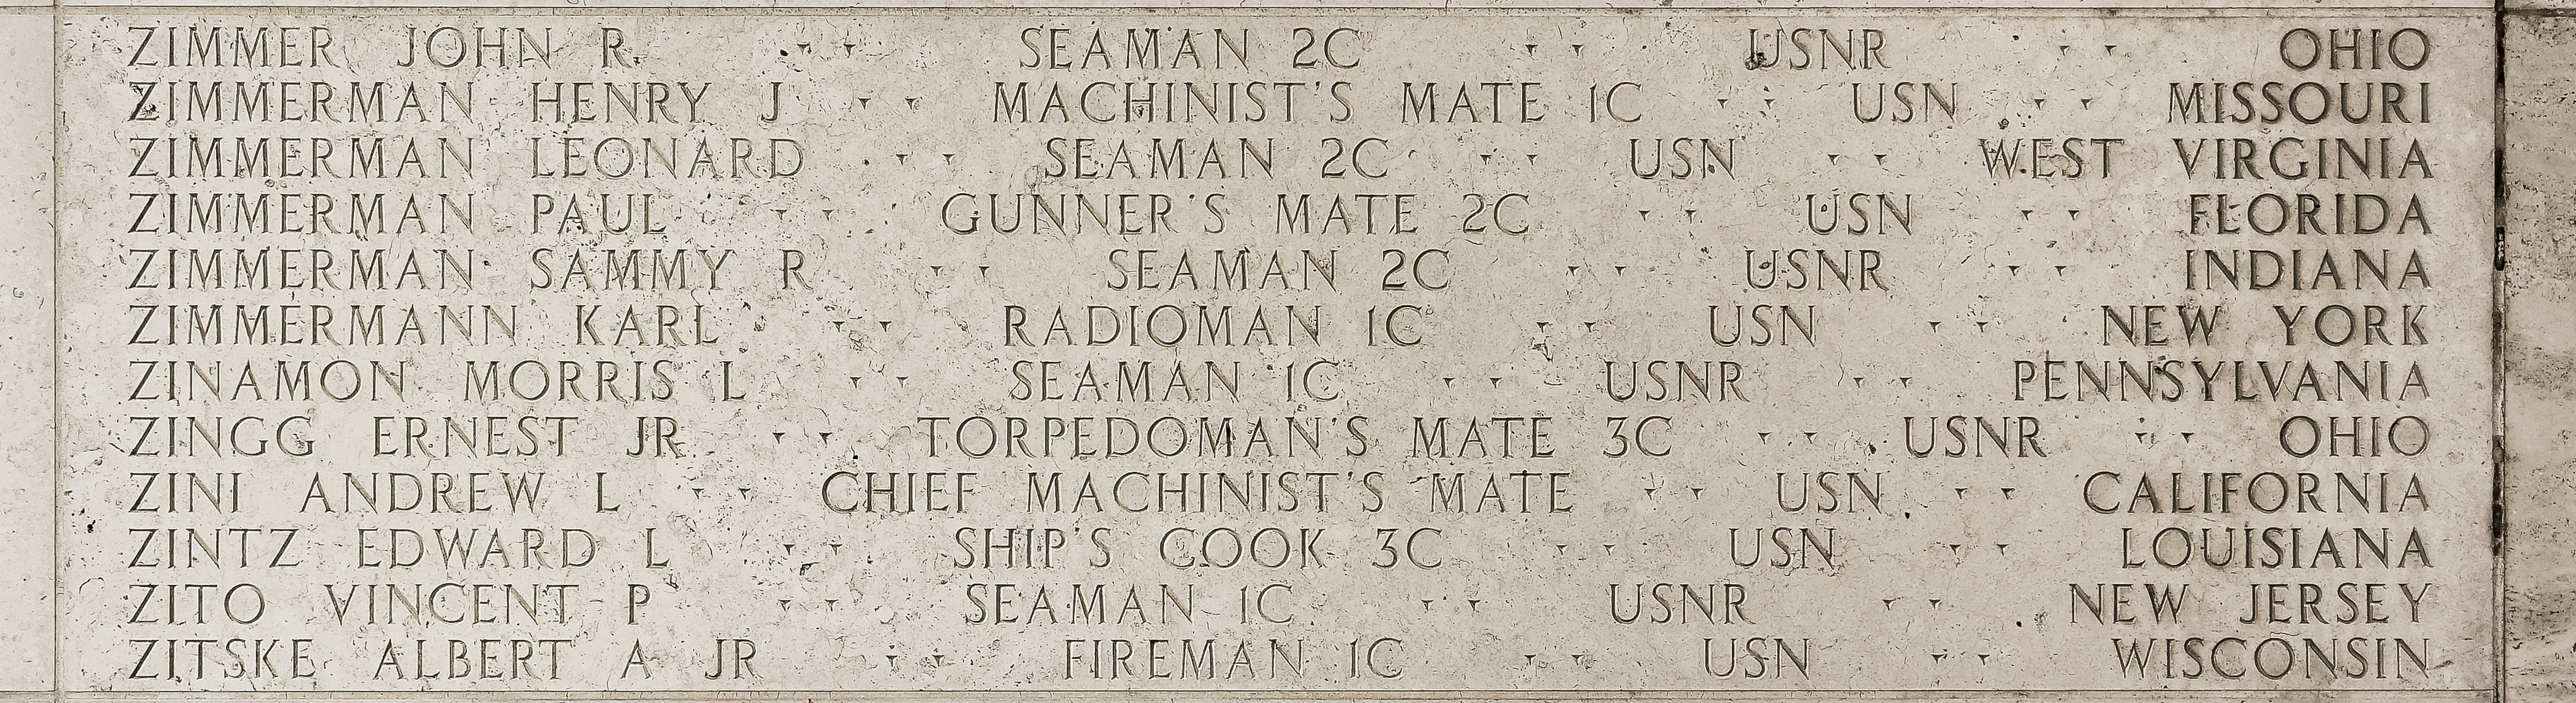 Leonard  Zimmerman, Seaman Second Class